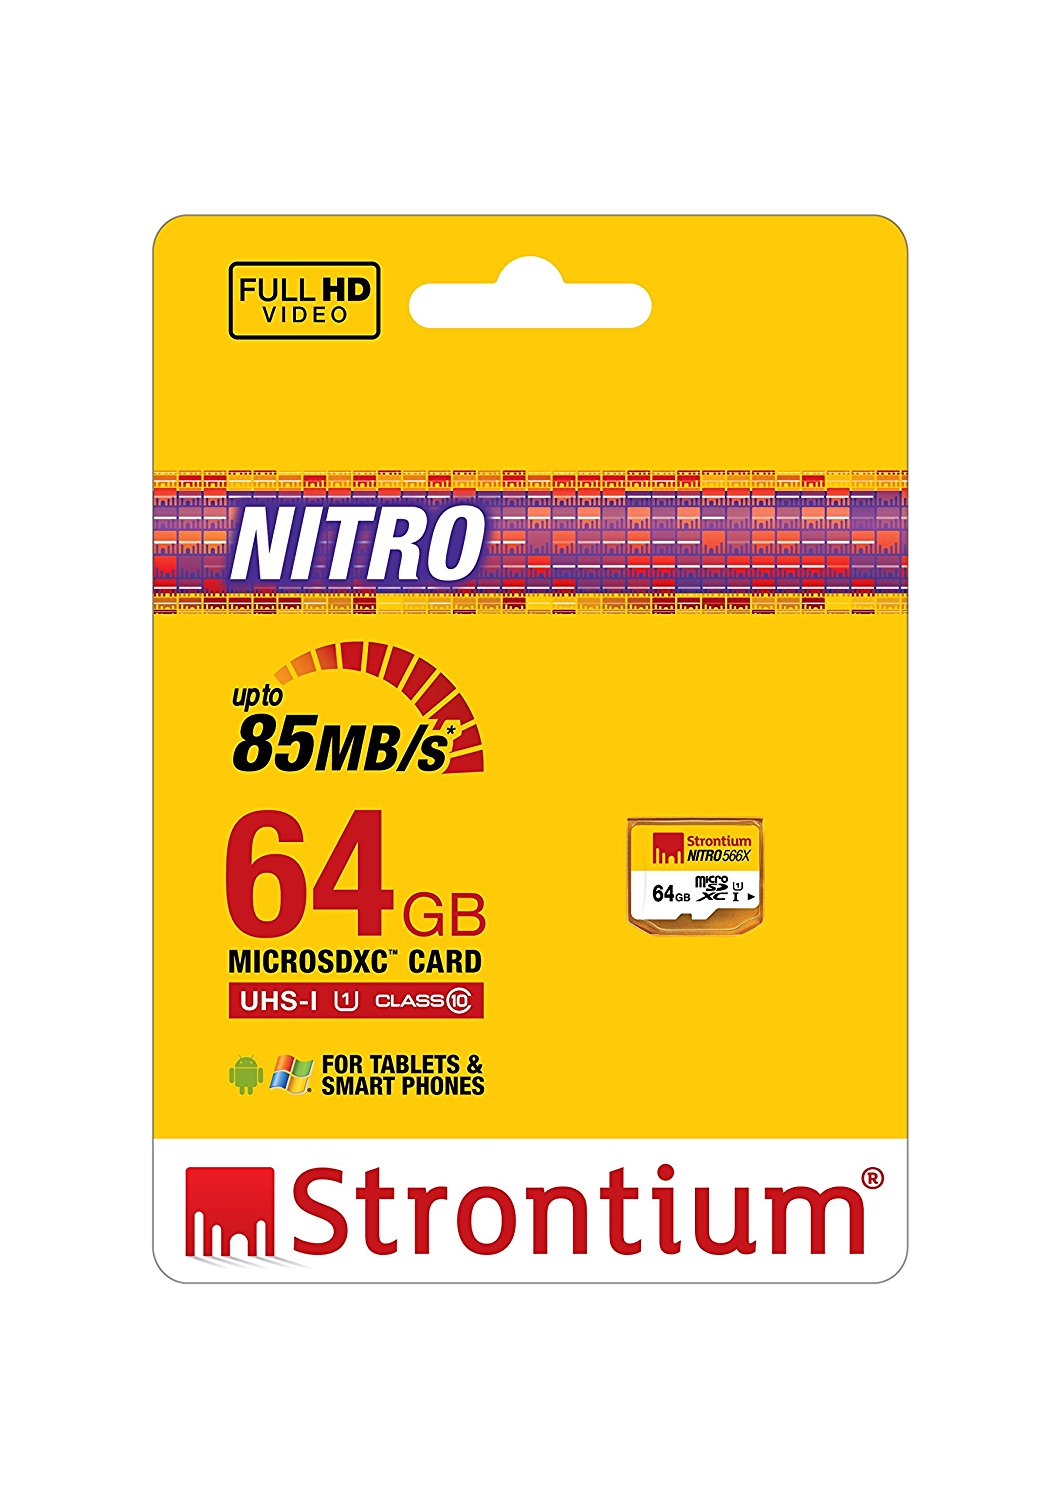 Strontium Nitro 64GB 85MB/s UHS-1 Class 10 MicroSDXC Memory Card